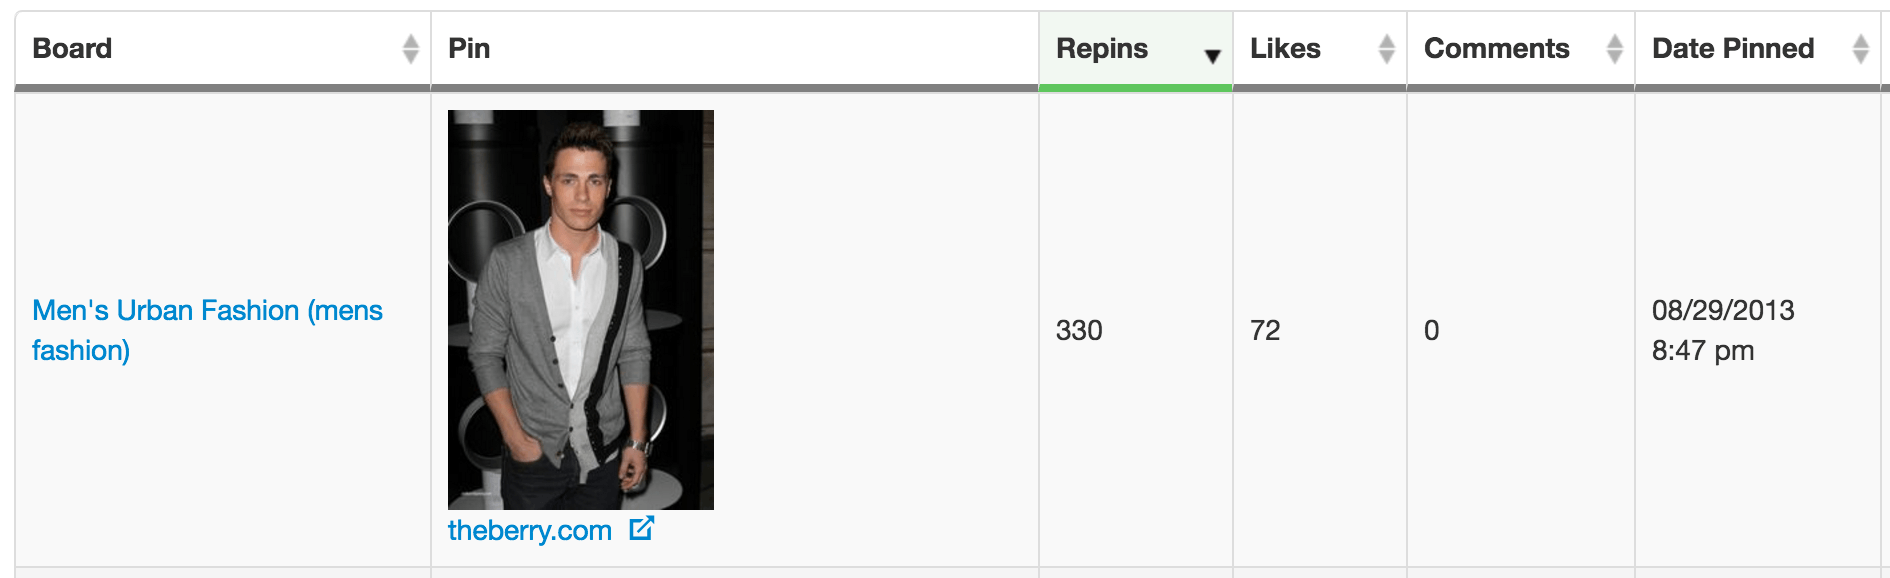 Pin Inspector Screenshot Shows Individual Repins not Aggregate Repins